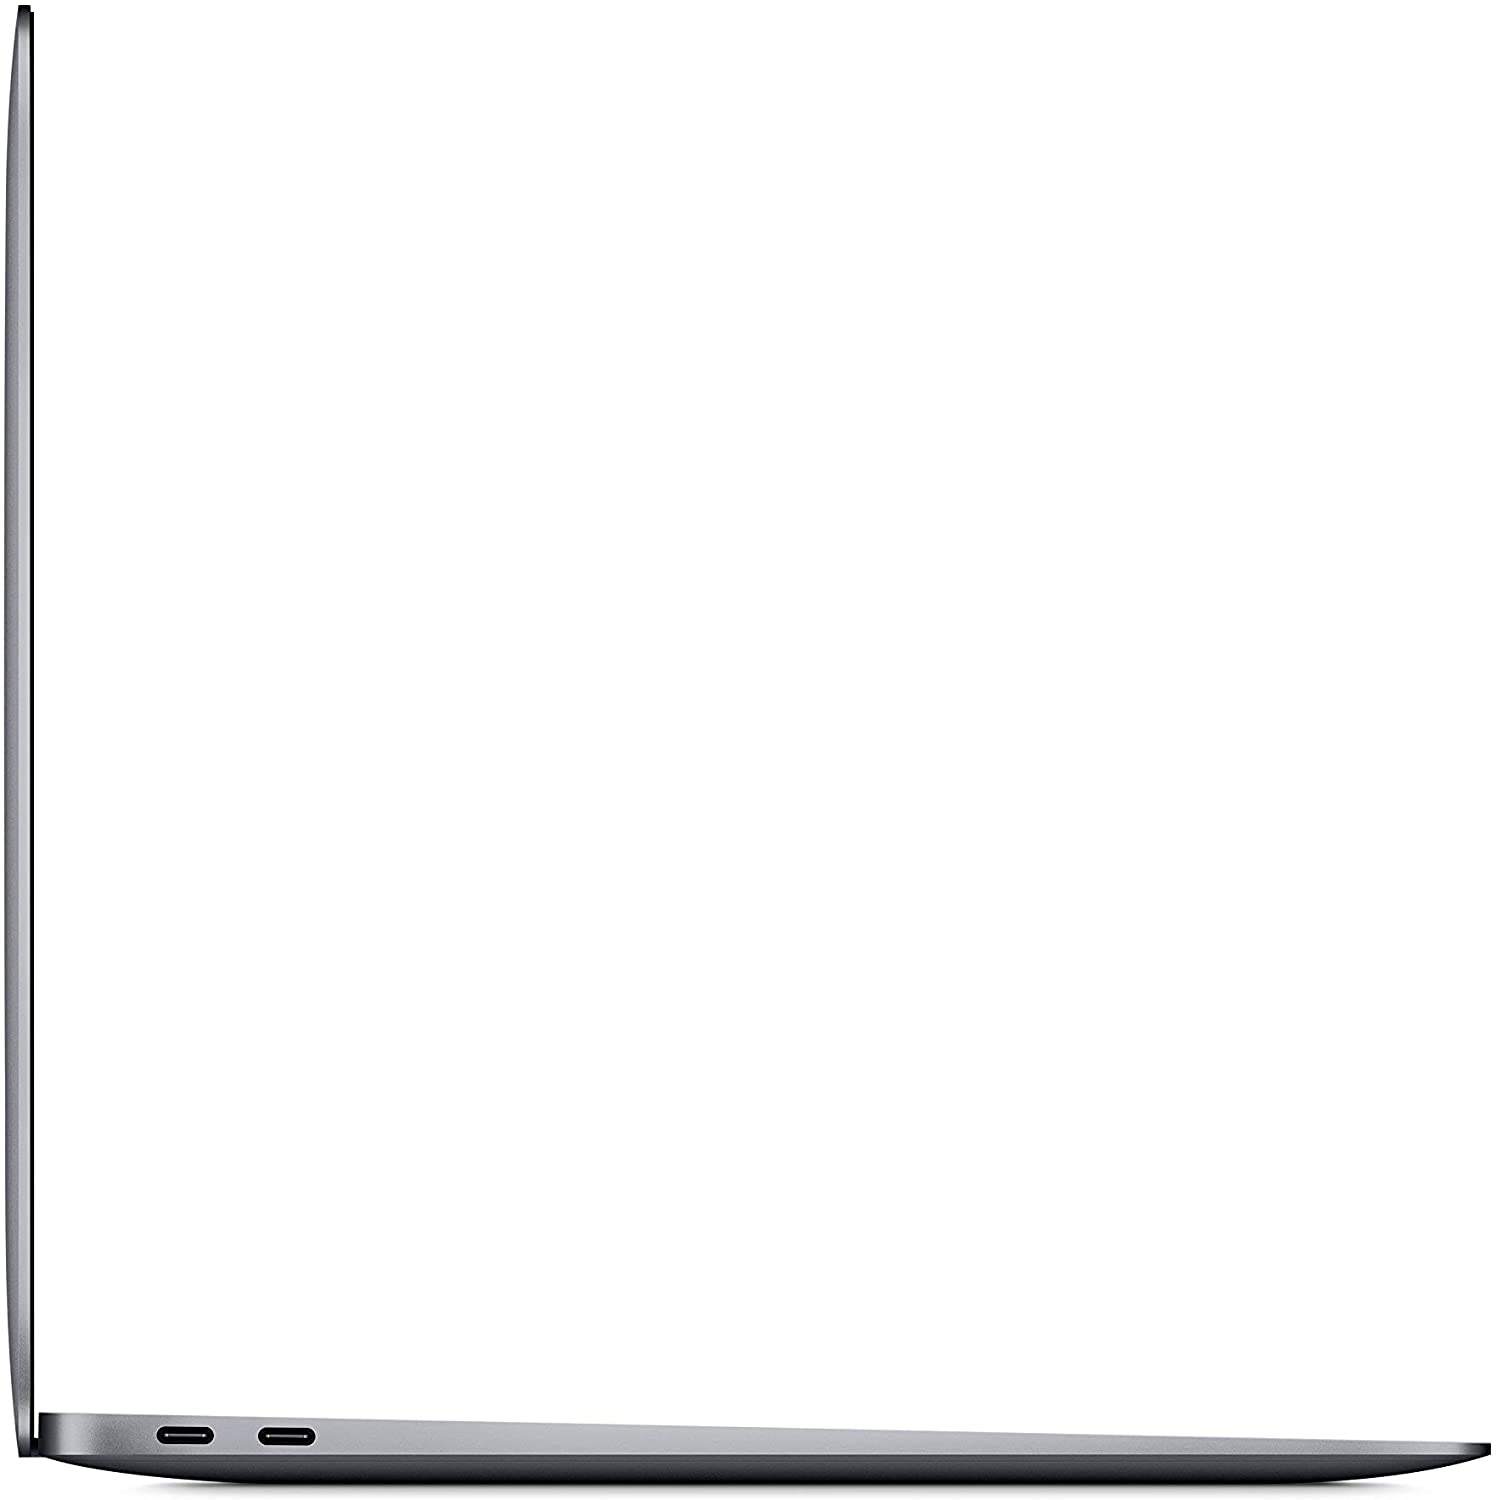 New Apple MacBook Air (13-inch, 8GB RAM, 256GB SSD Storage) - Space Gray